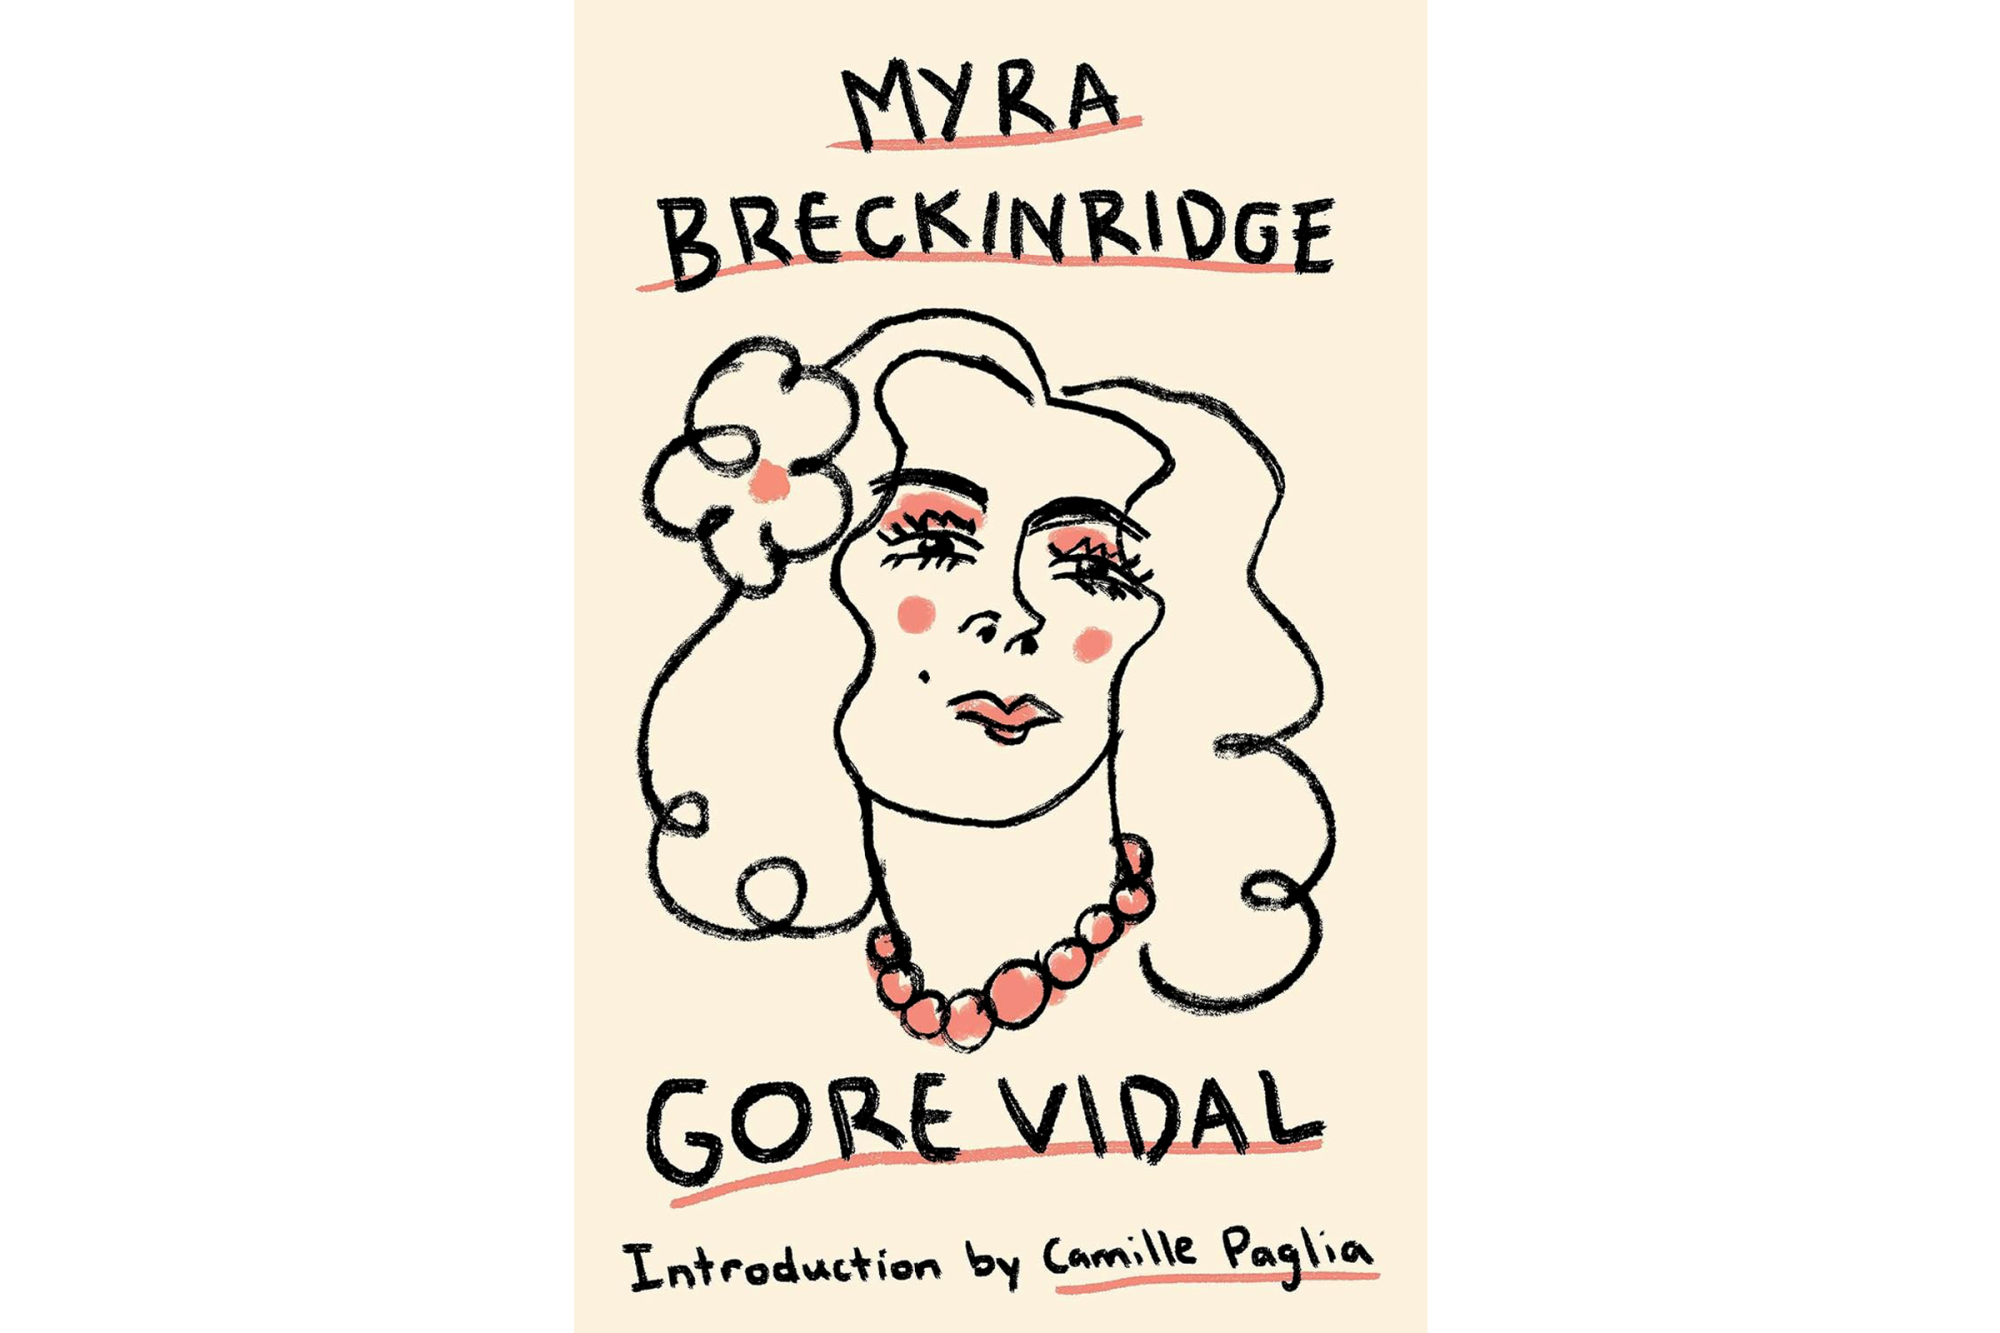 "Myra Breckinridge" by Gore Vidal